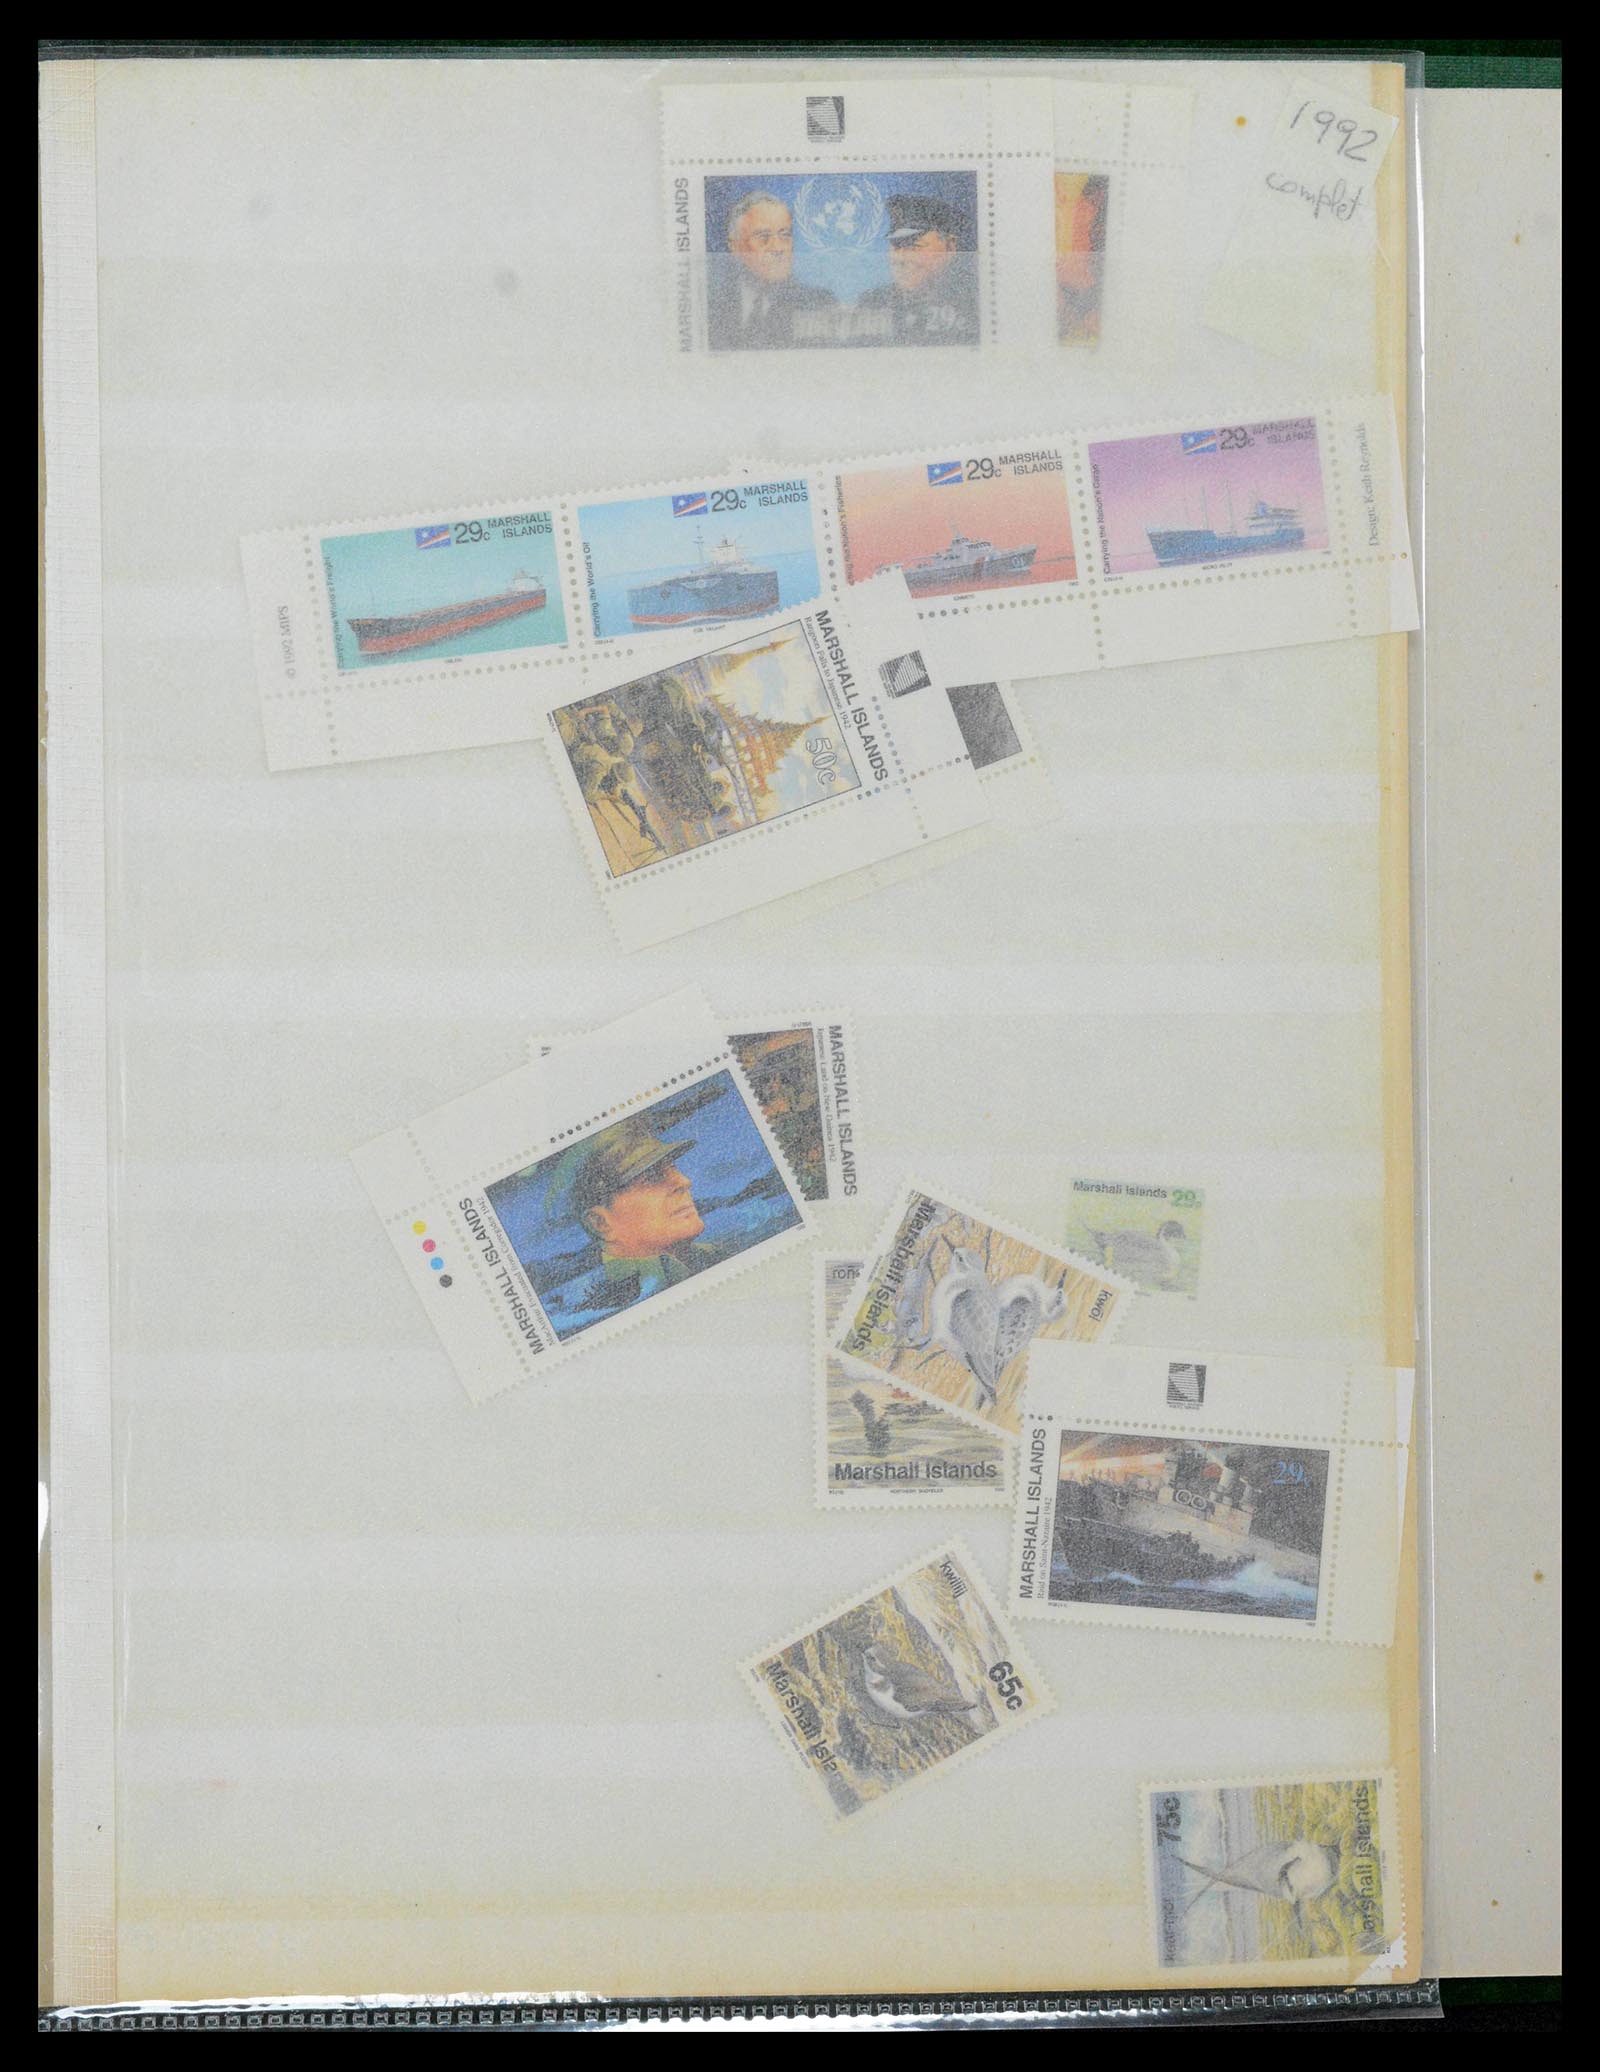 39222 0159 - Stamp collection 39222 Palau, Micronesia and Marshall islands 1980-1995.